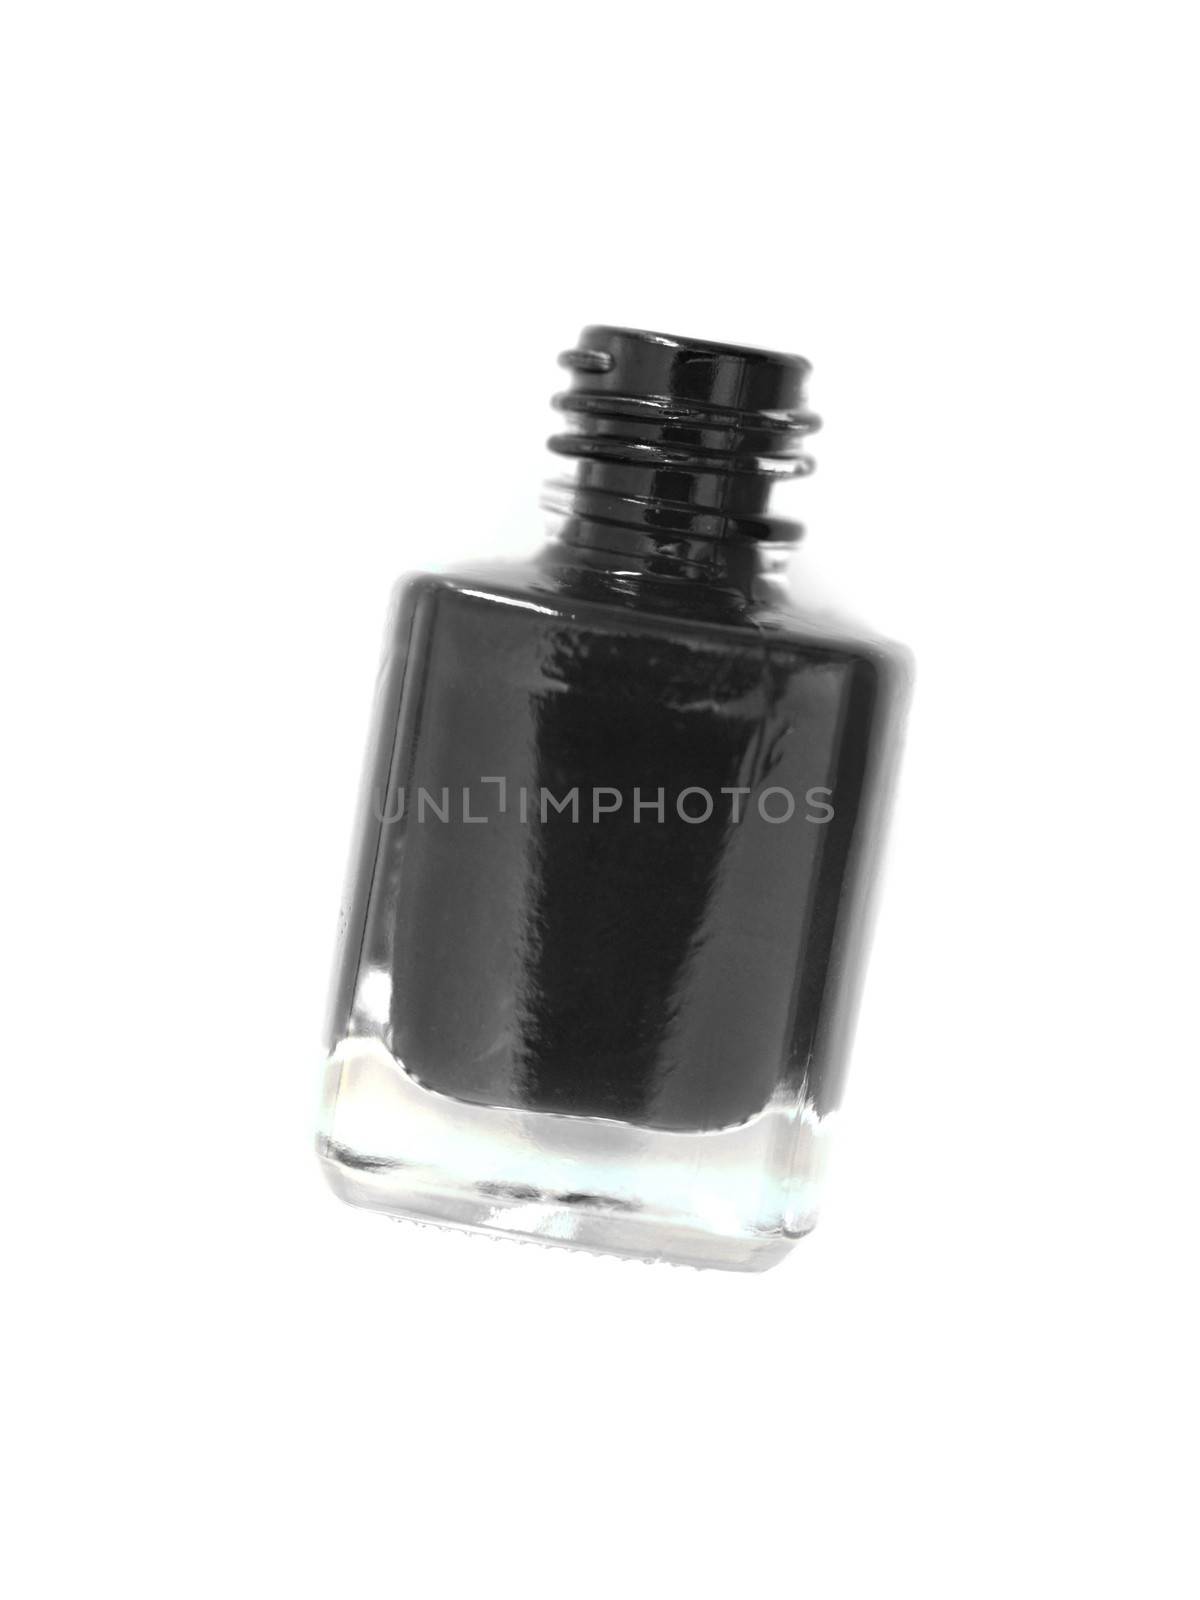 Nail polish isolated against a plain background